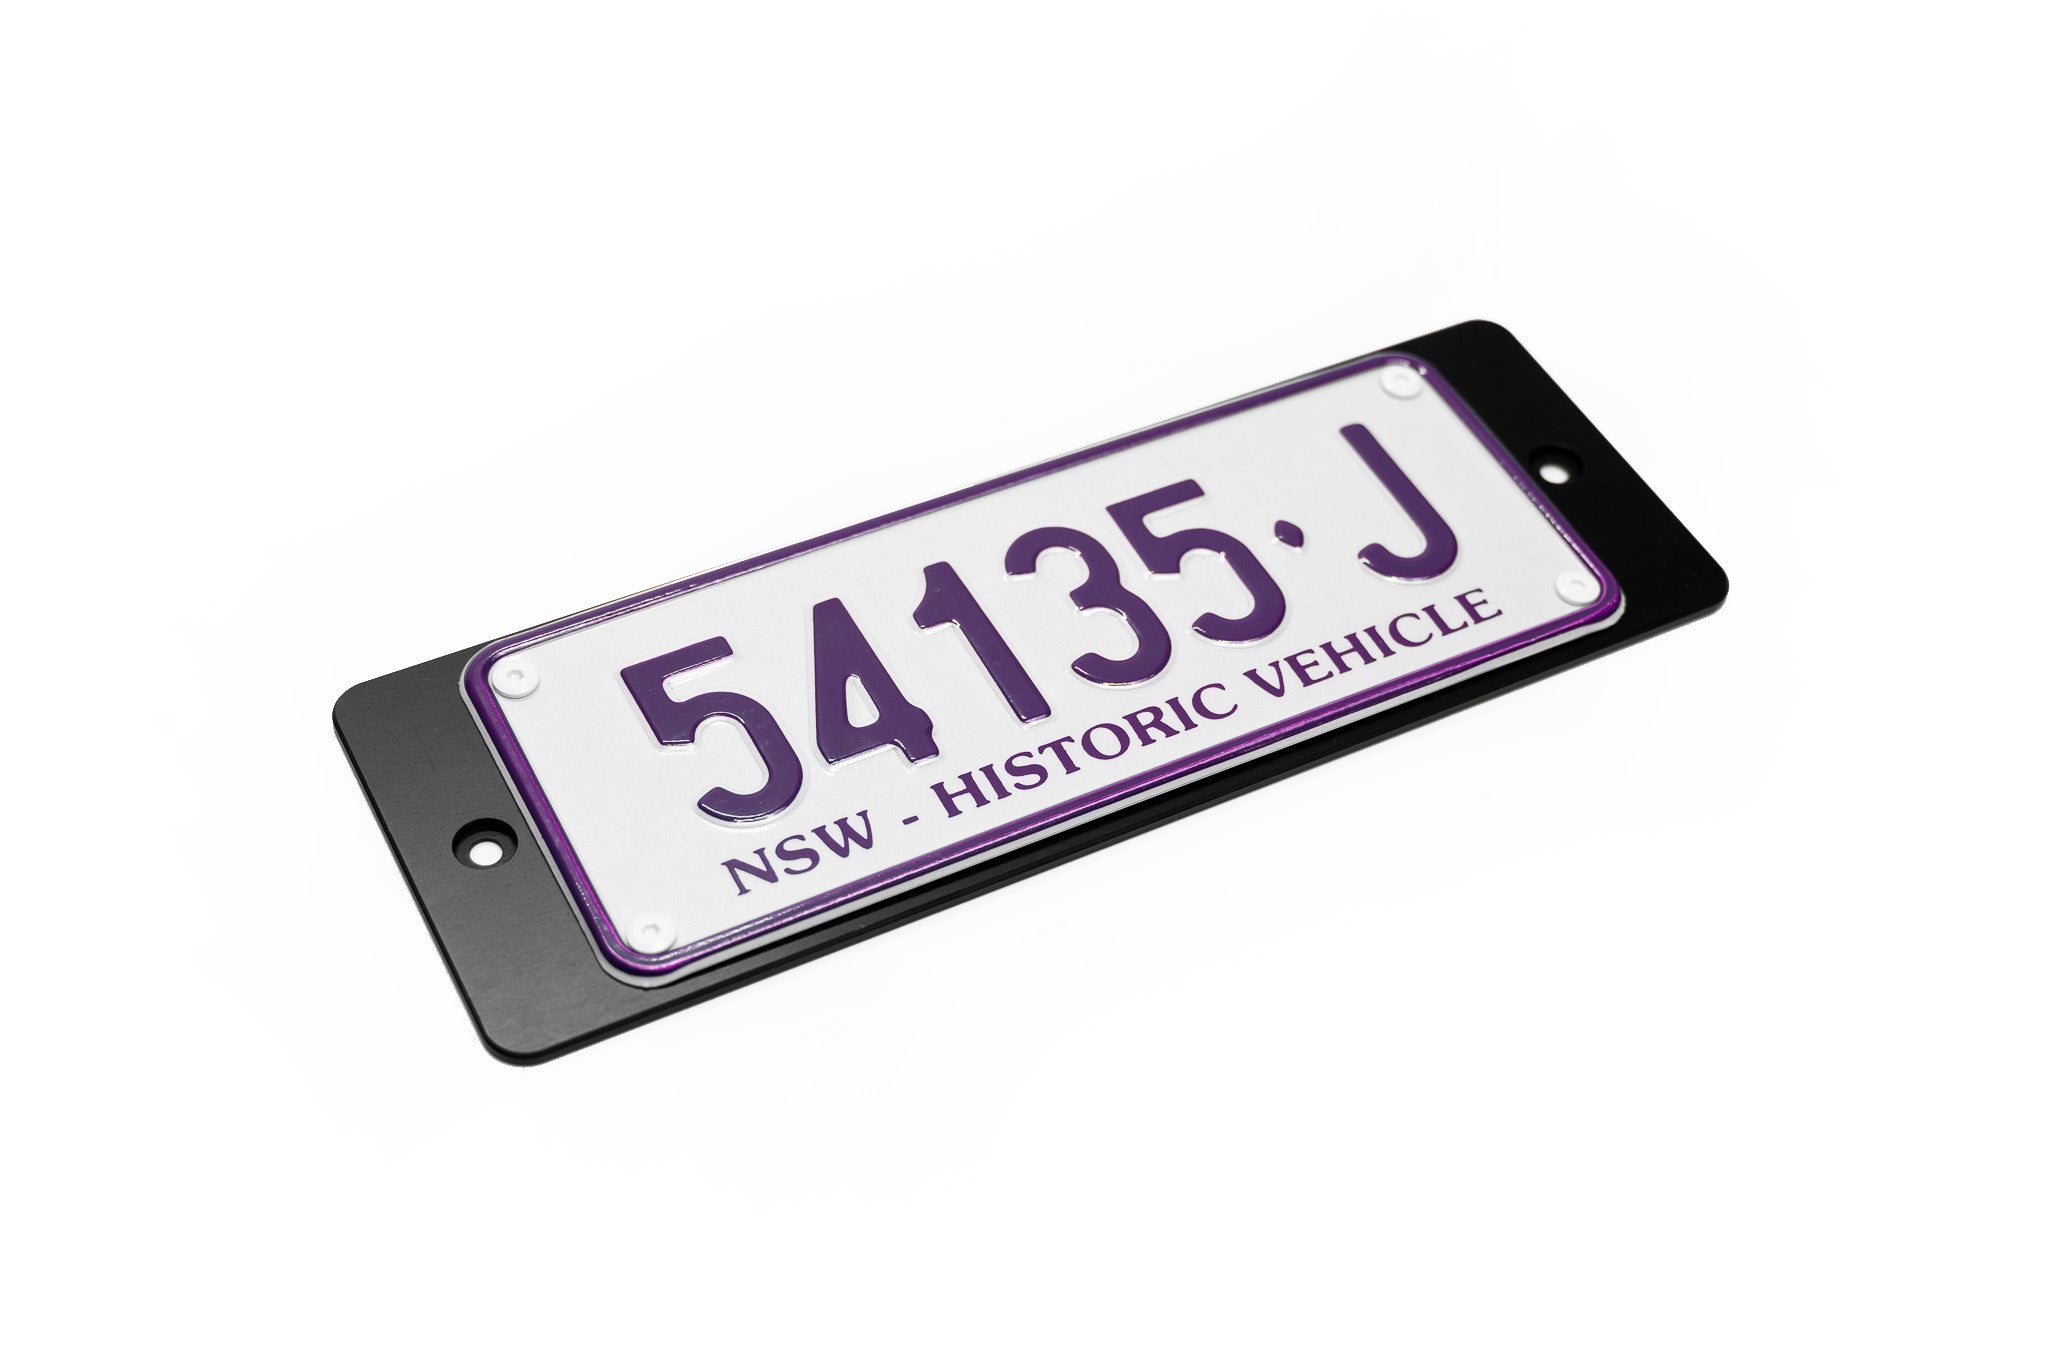 [NSW] Historic Vehicle - Number Plate Bracket